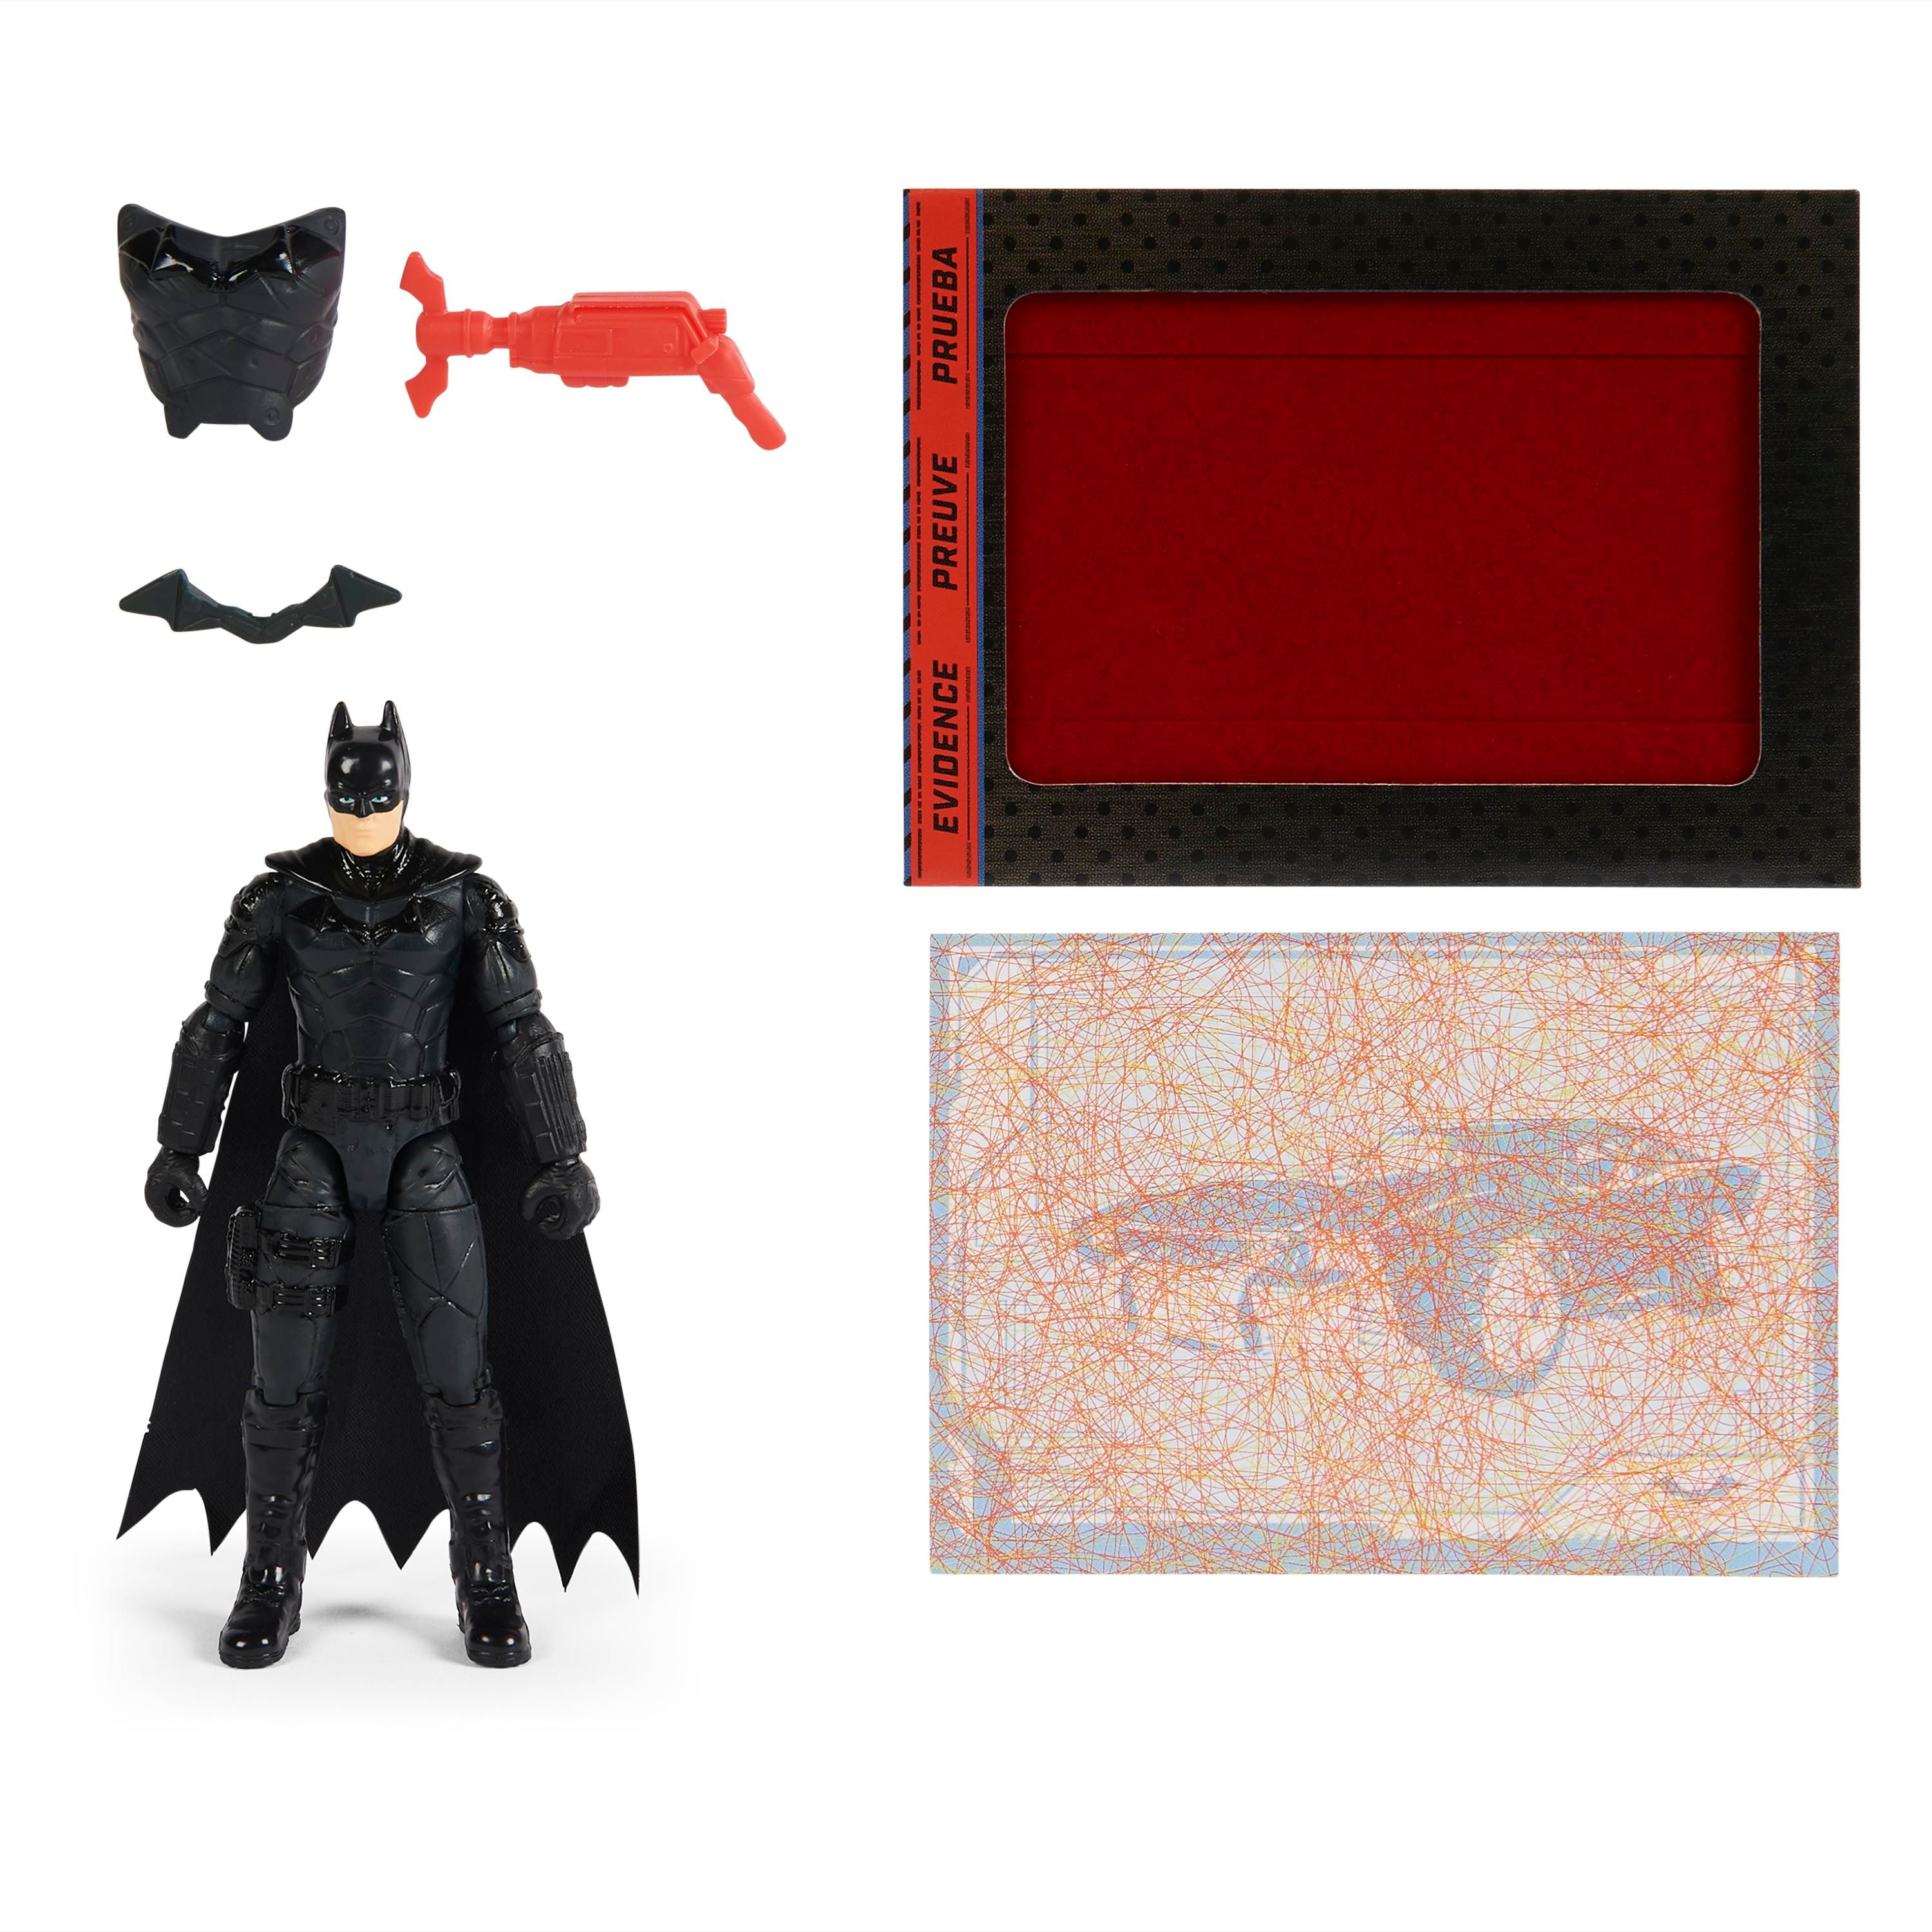 The Batman Collection